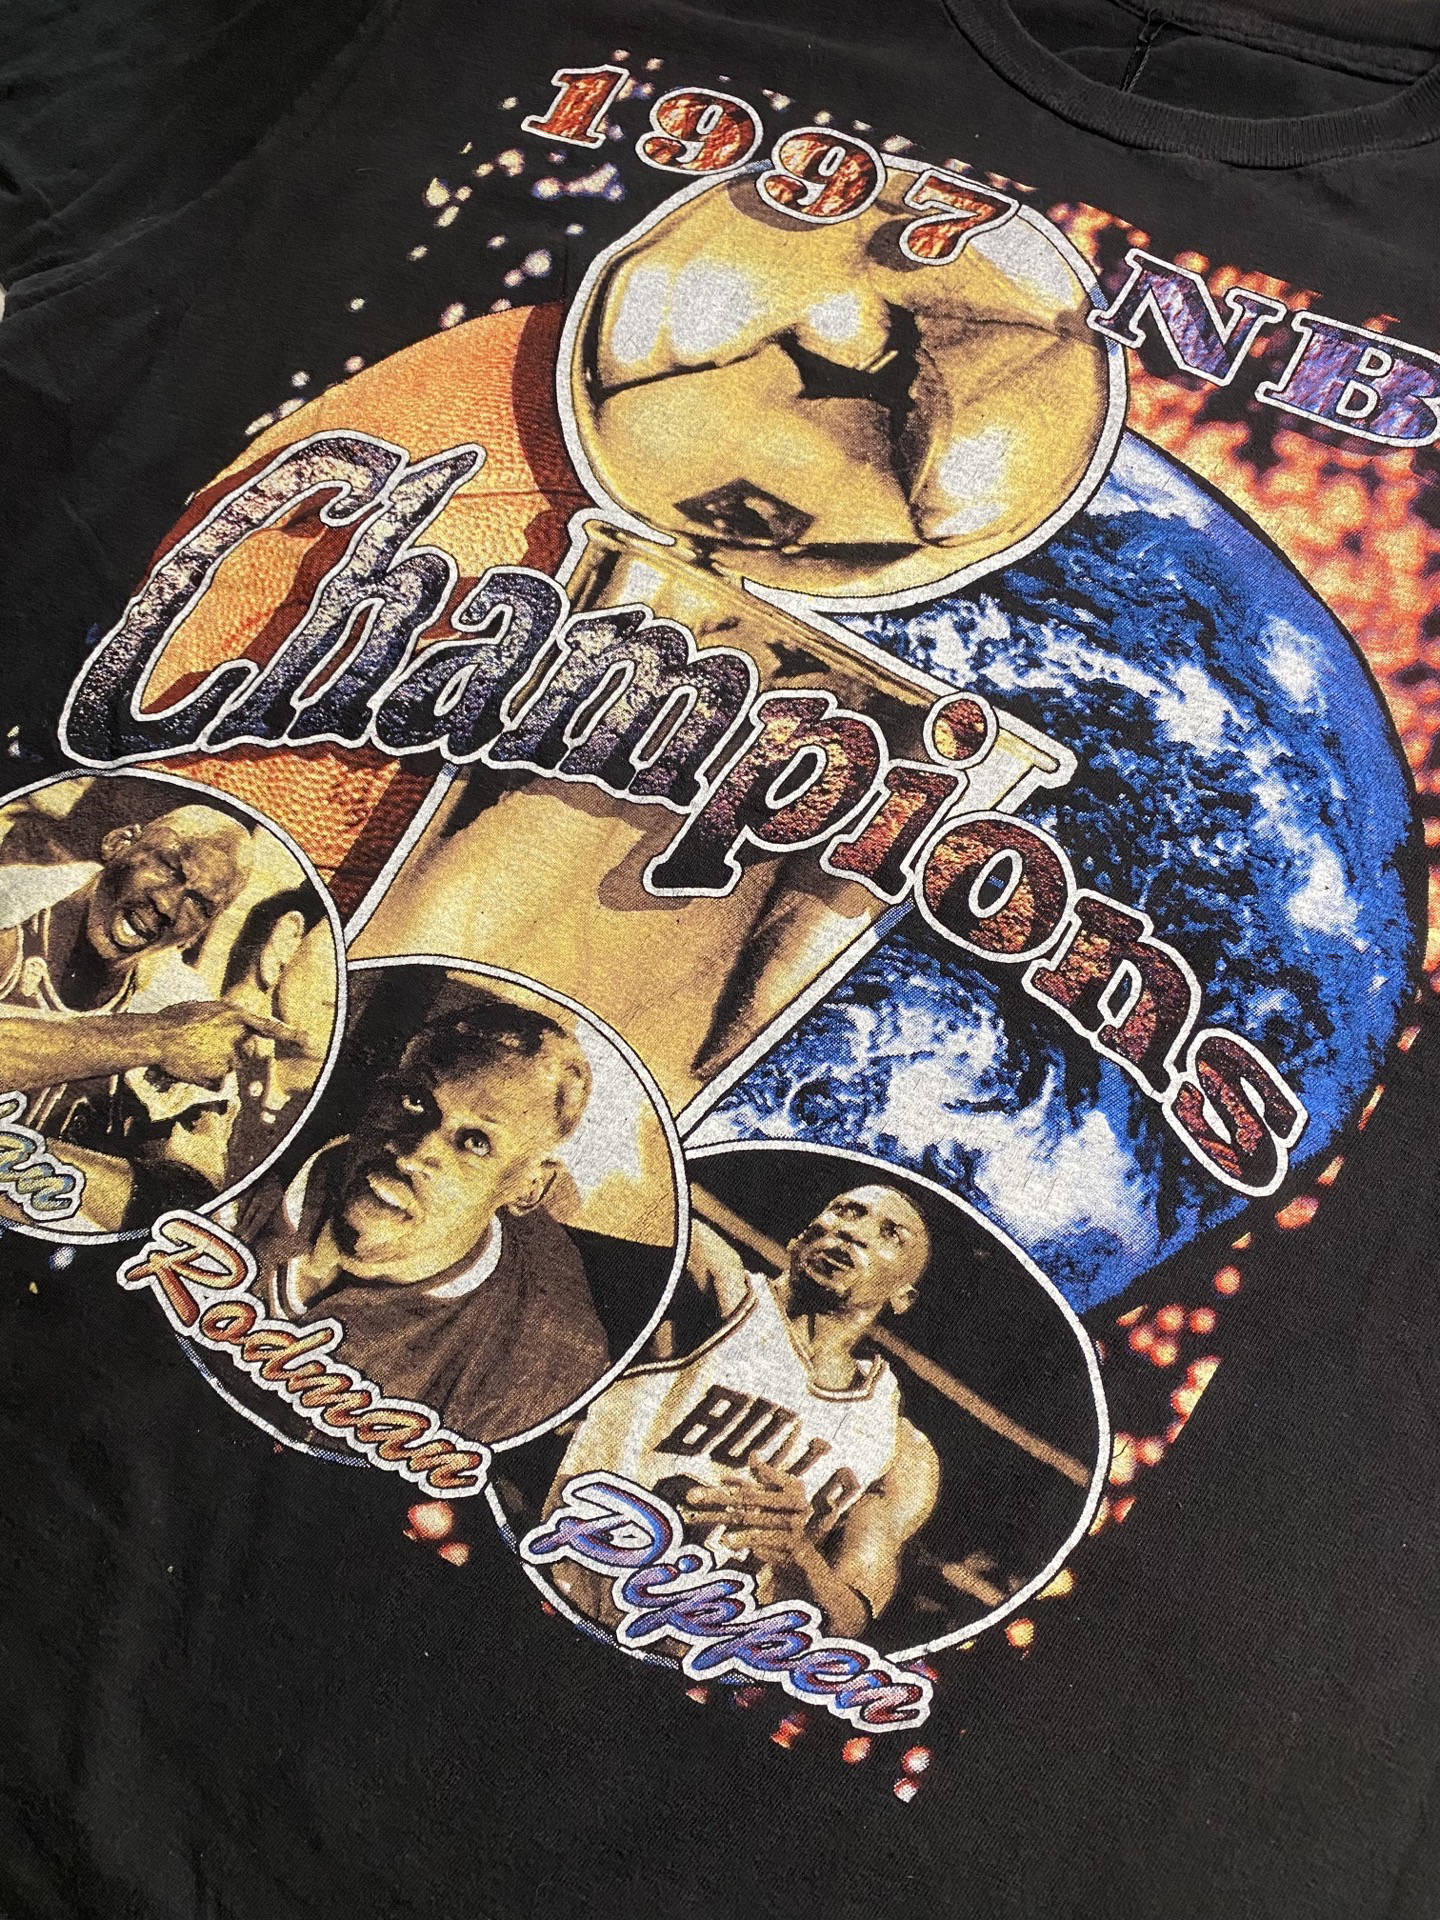 Vintage Chicago Bulls 3 Peat Champions Bootleg 90's t-shirt Basketball NBA  Jordan Pippen Rodman rap hip-hop